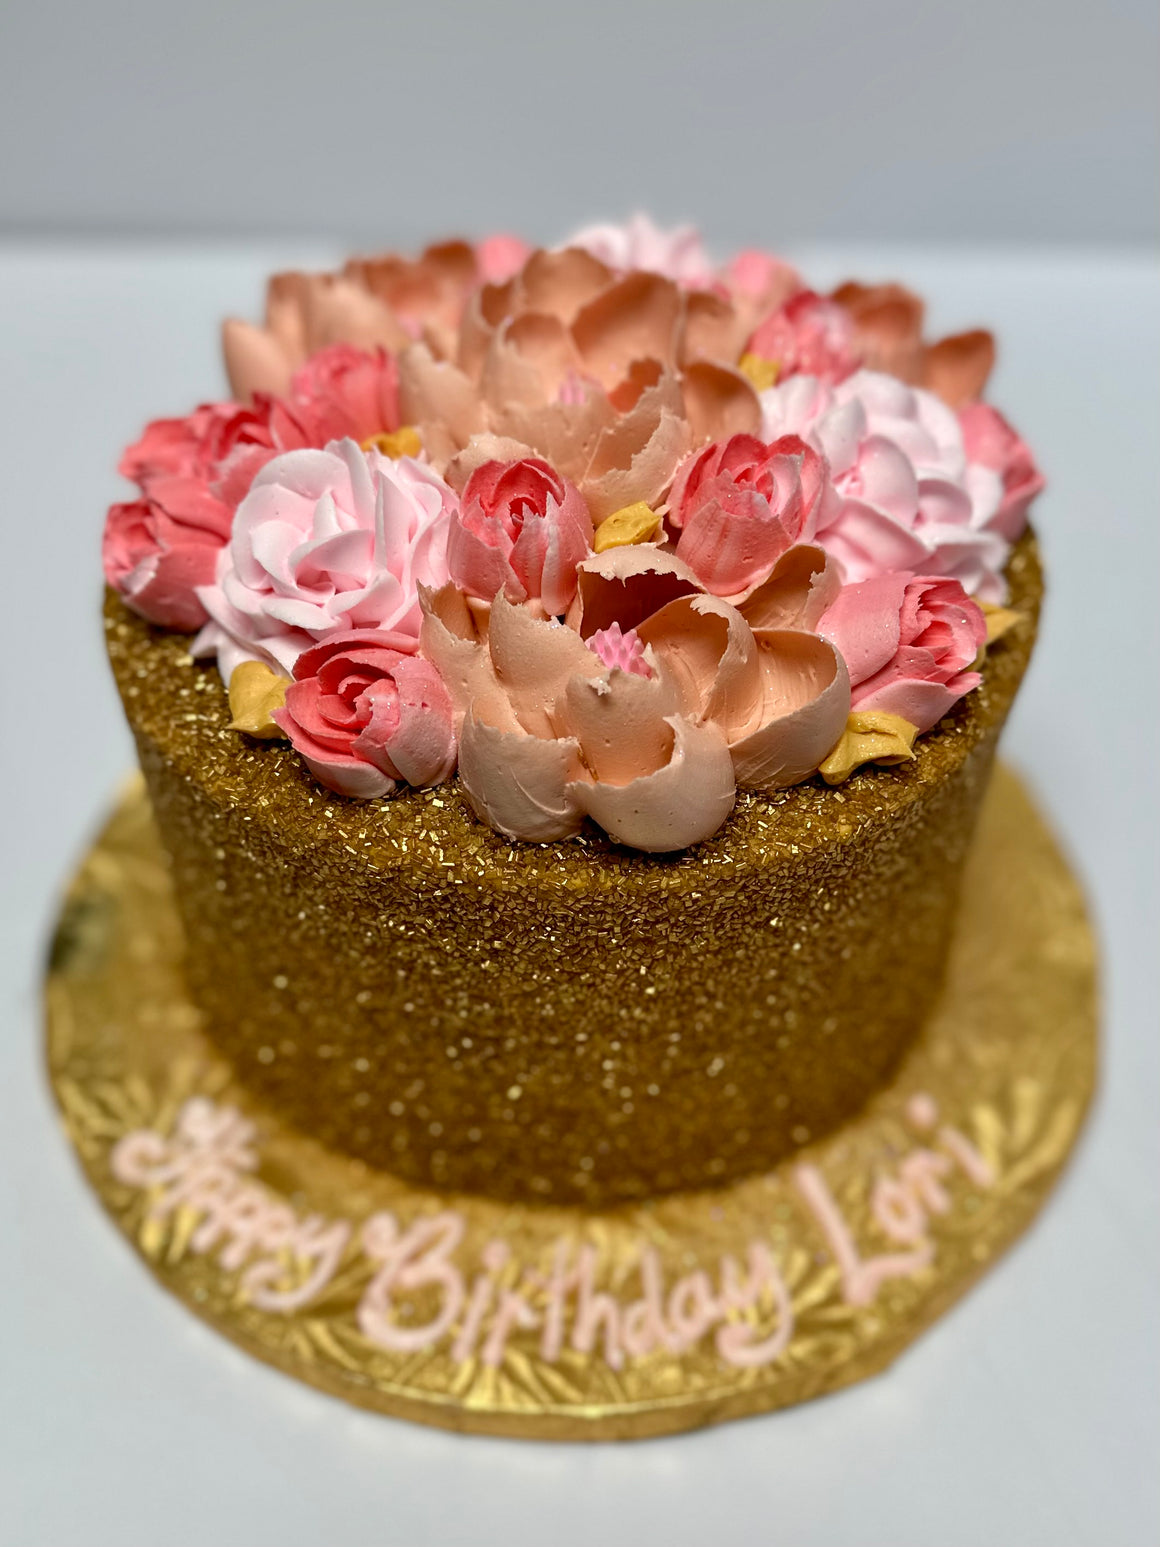 Rose Gold Glam 7" Cake